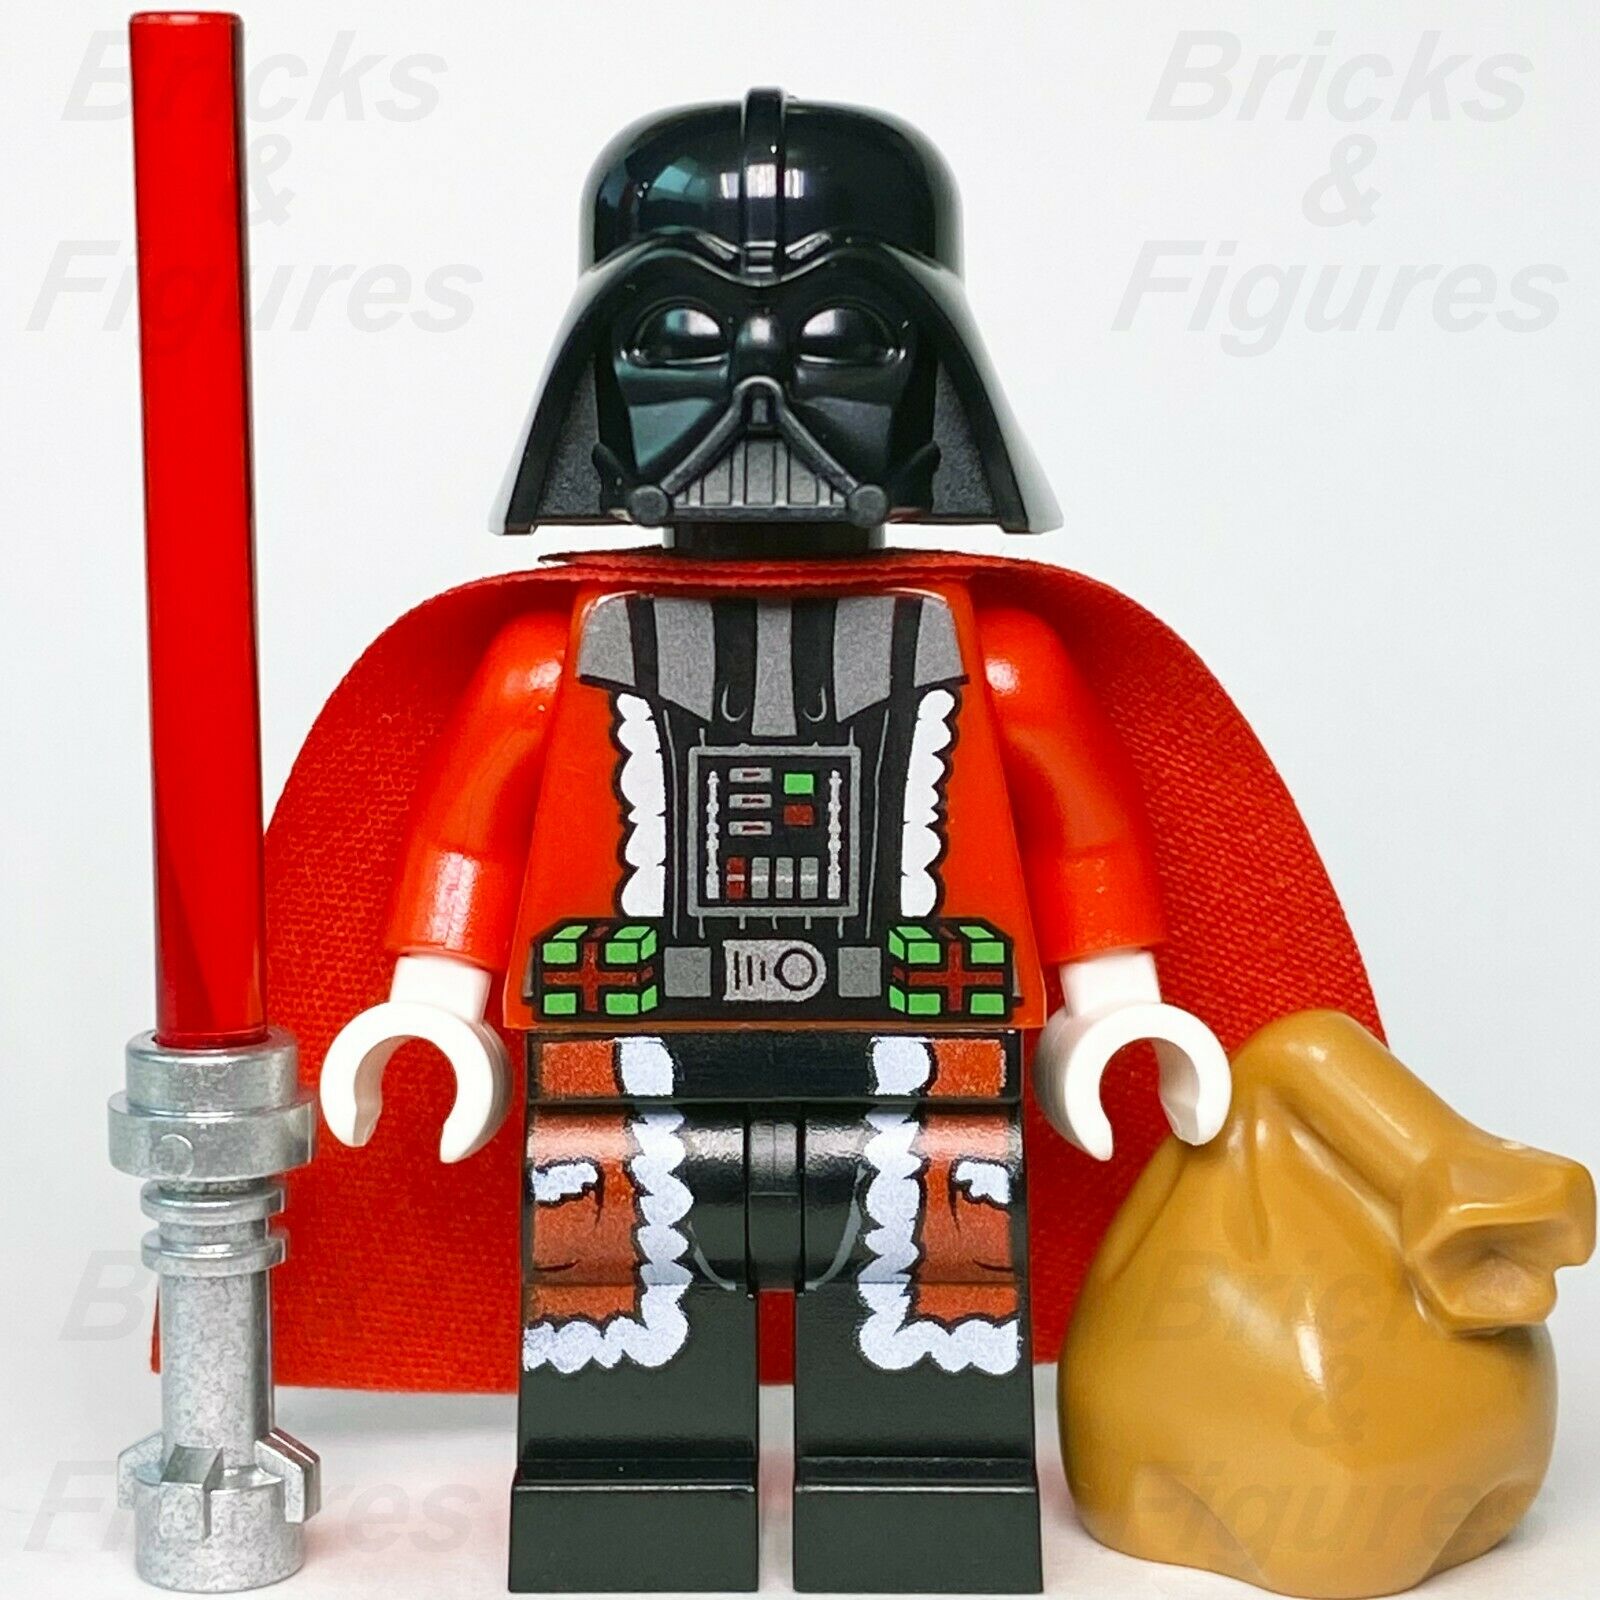 New Star Wars LEGO Santa Darth Vader Sith Father Christmas Minifigure 75056 - Bricks & Figures